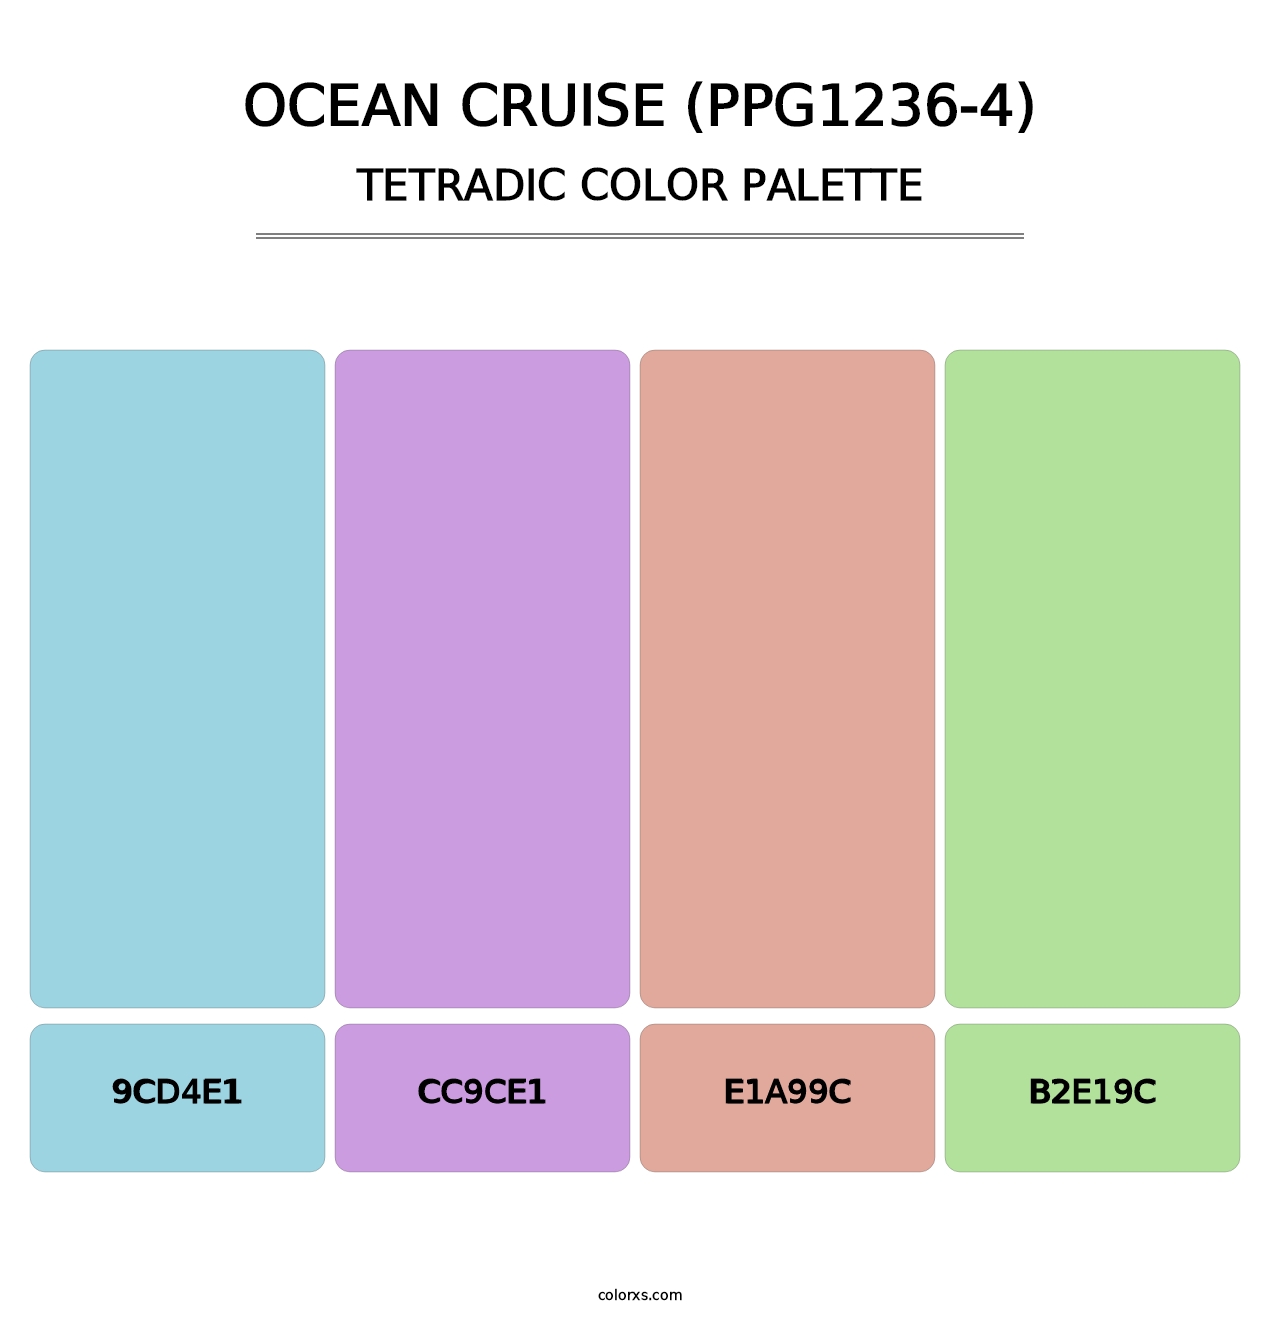 Ocean Cruise (PPG1236-4) - Tetradic Color Palette